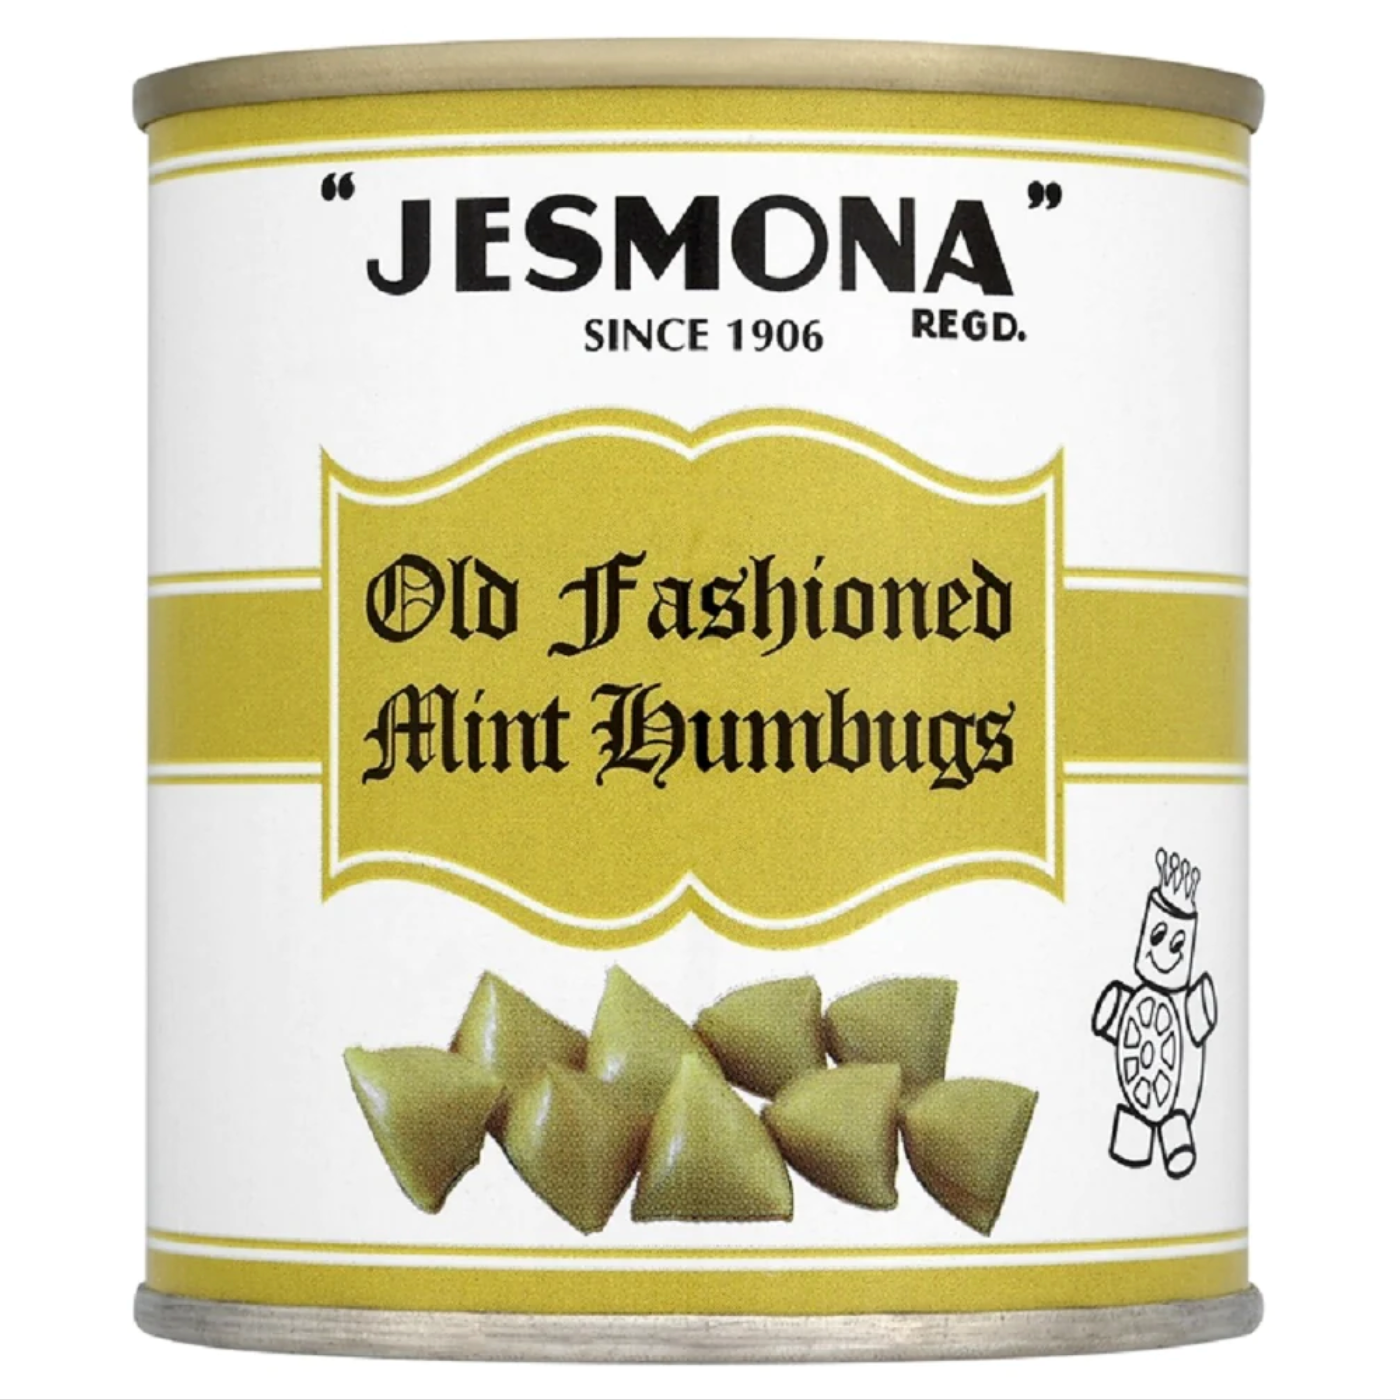 Jesmona Mint Humbugs Tin